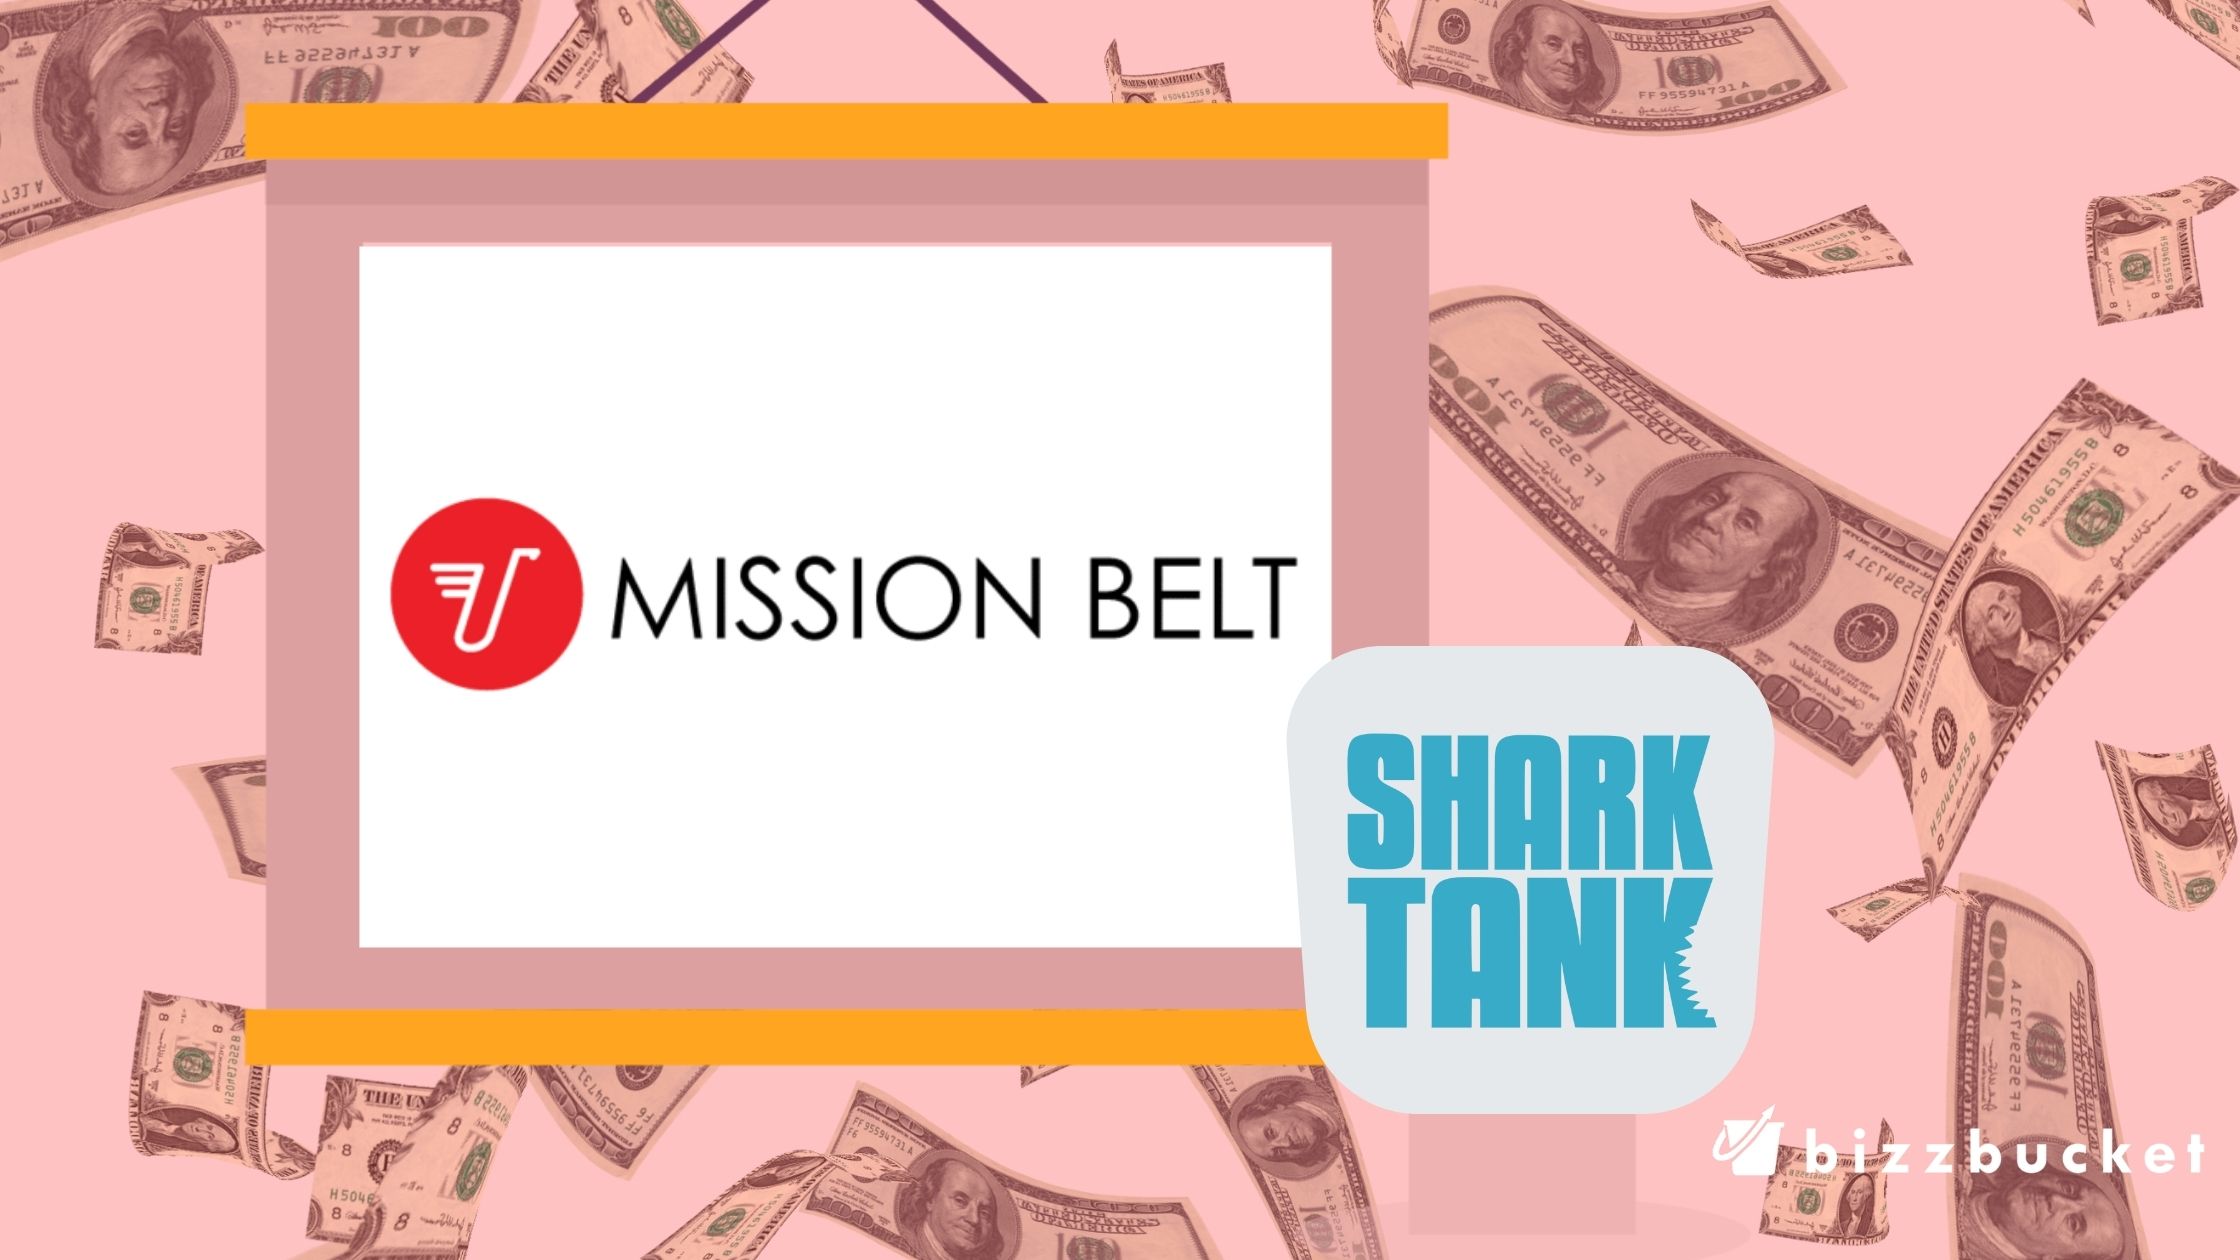 Mission Belt shark tank update